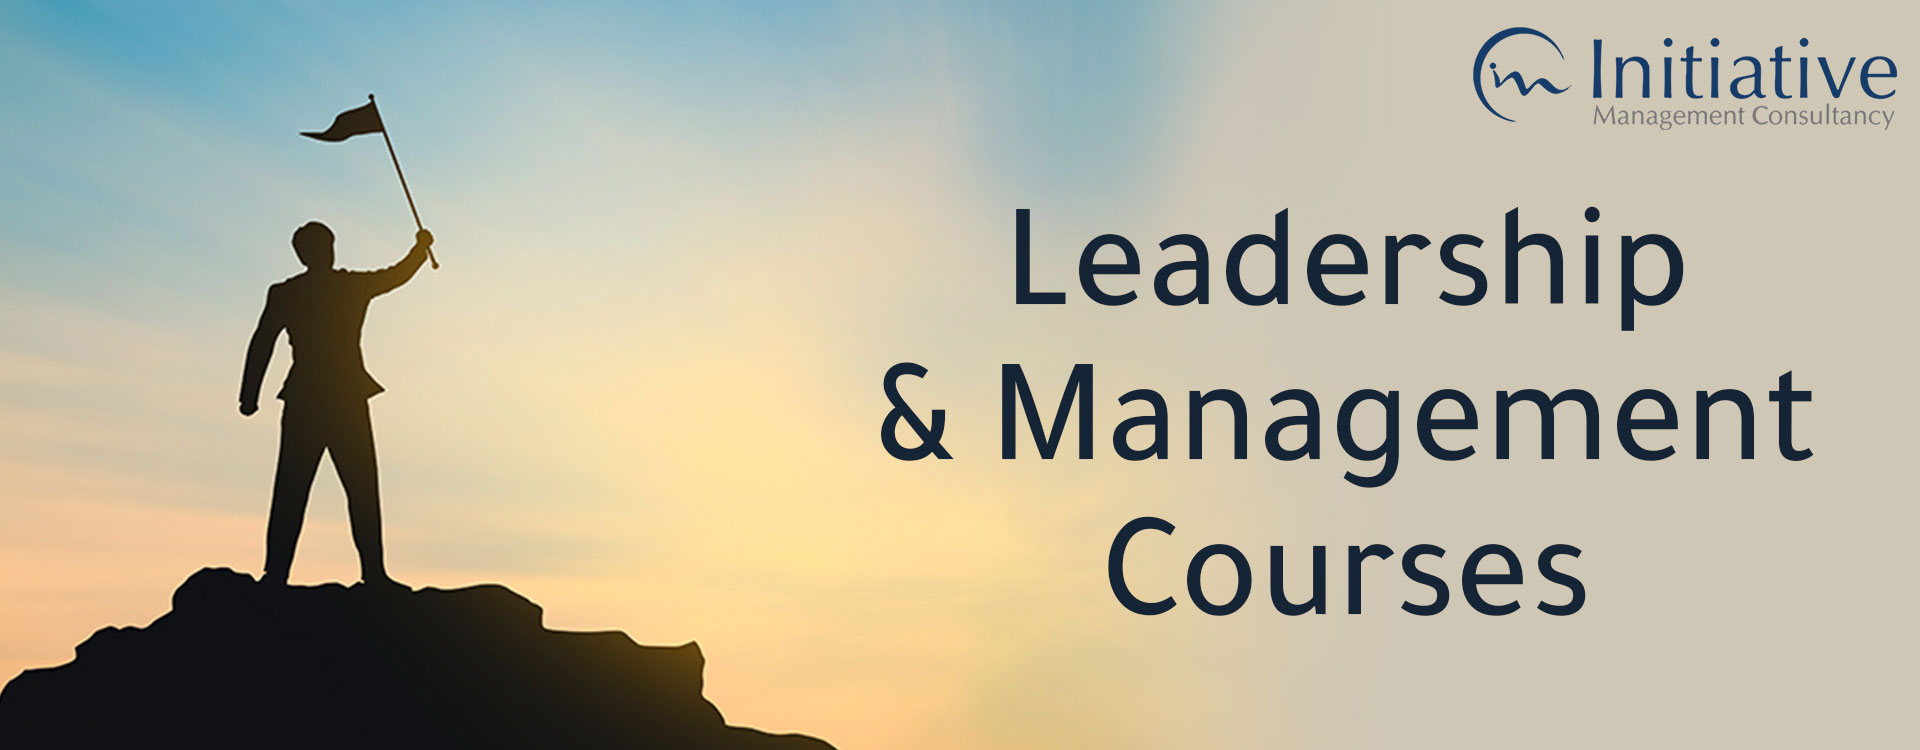 leadership & management courses IMC